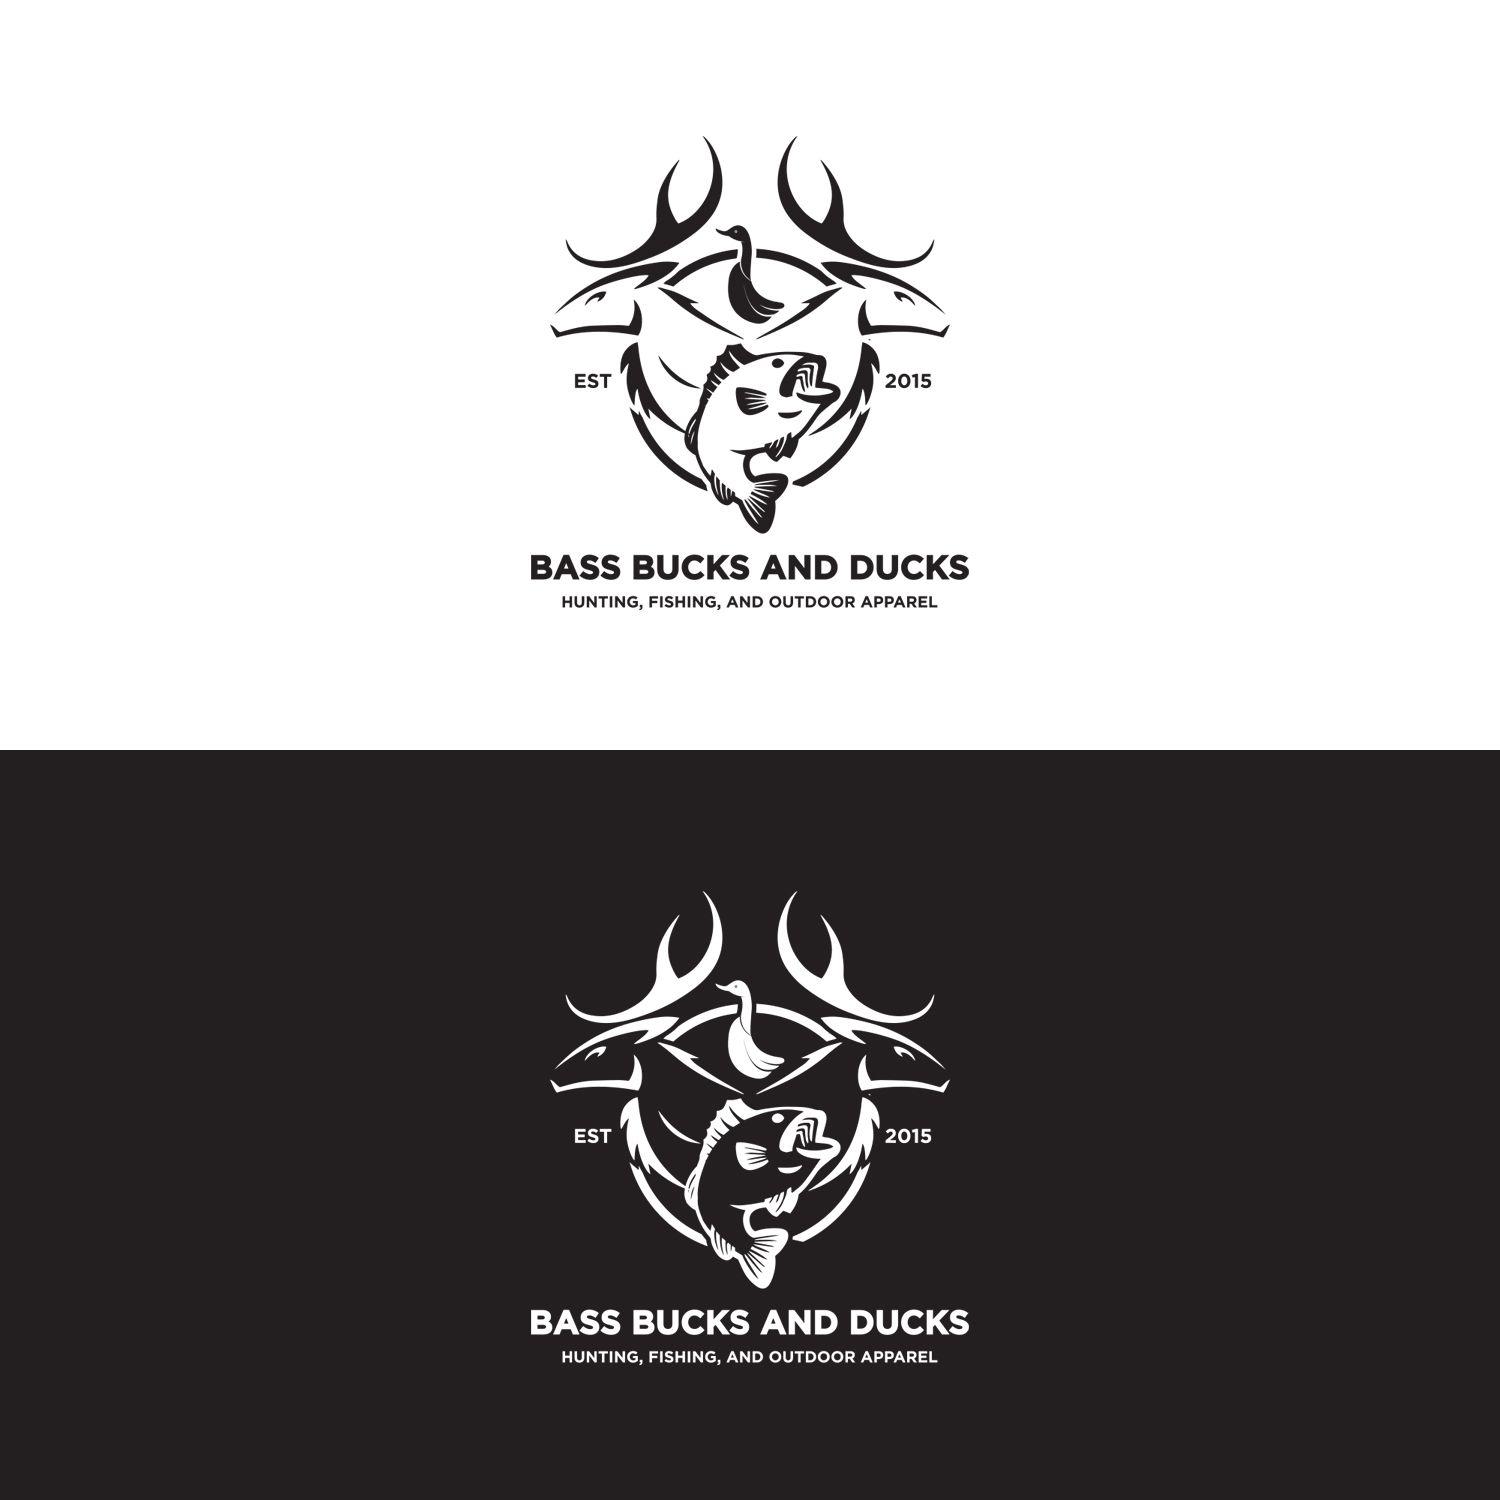 Bass Food Logo - Masculine, Conservative, Hunting Logo Design for Bass Bucks